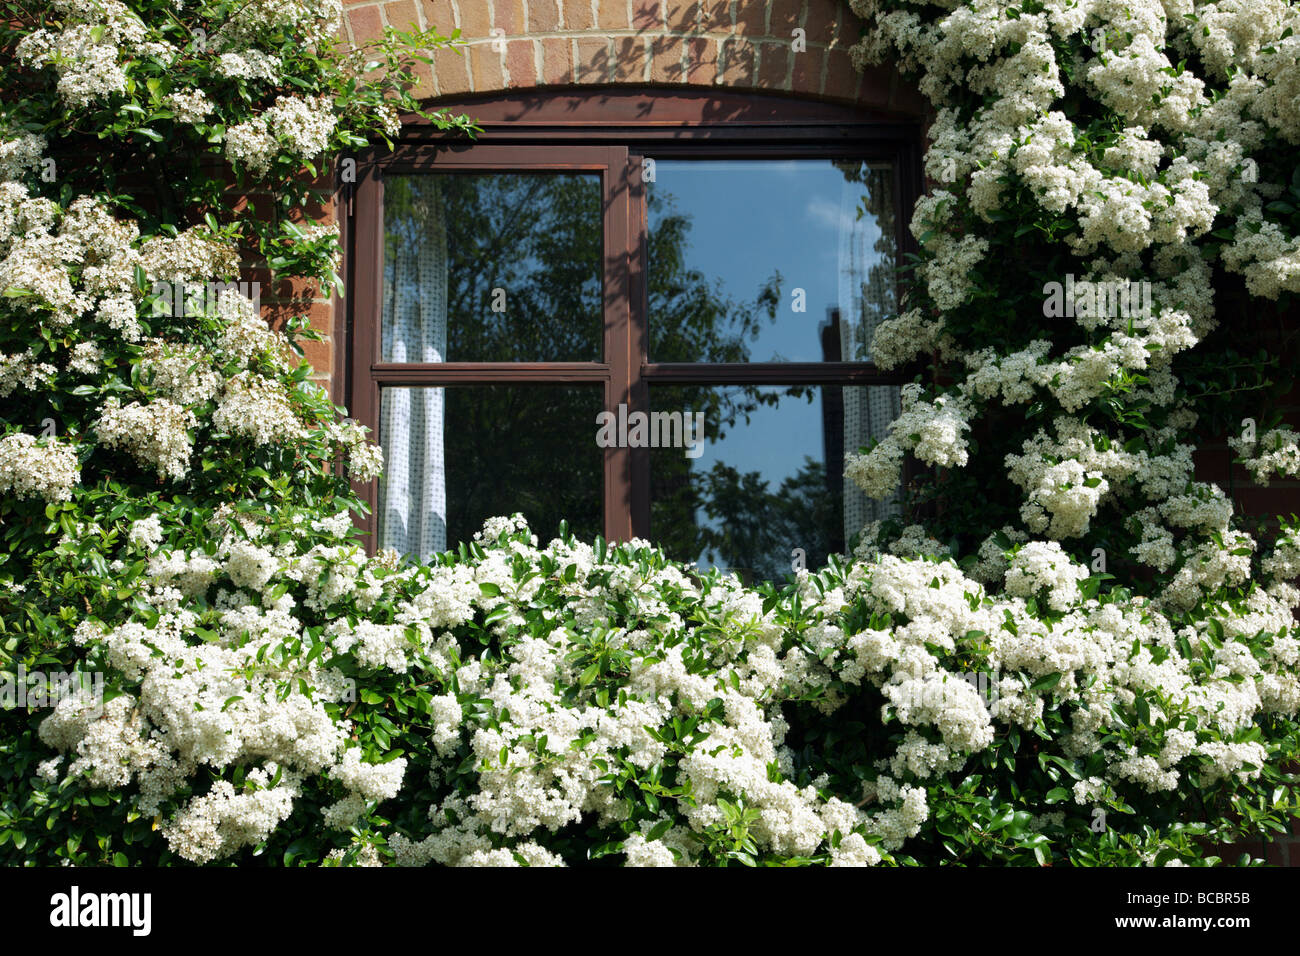 Pyracantha blossom around window Stock Photo